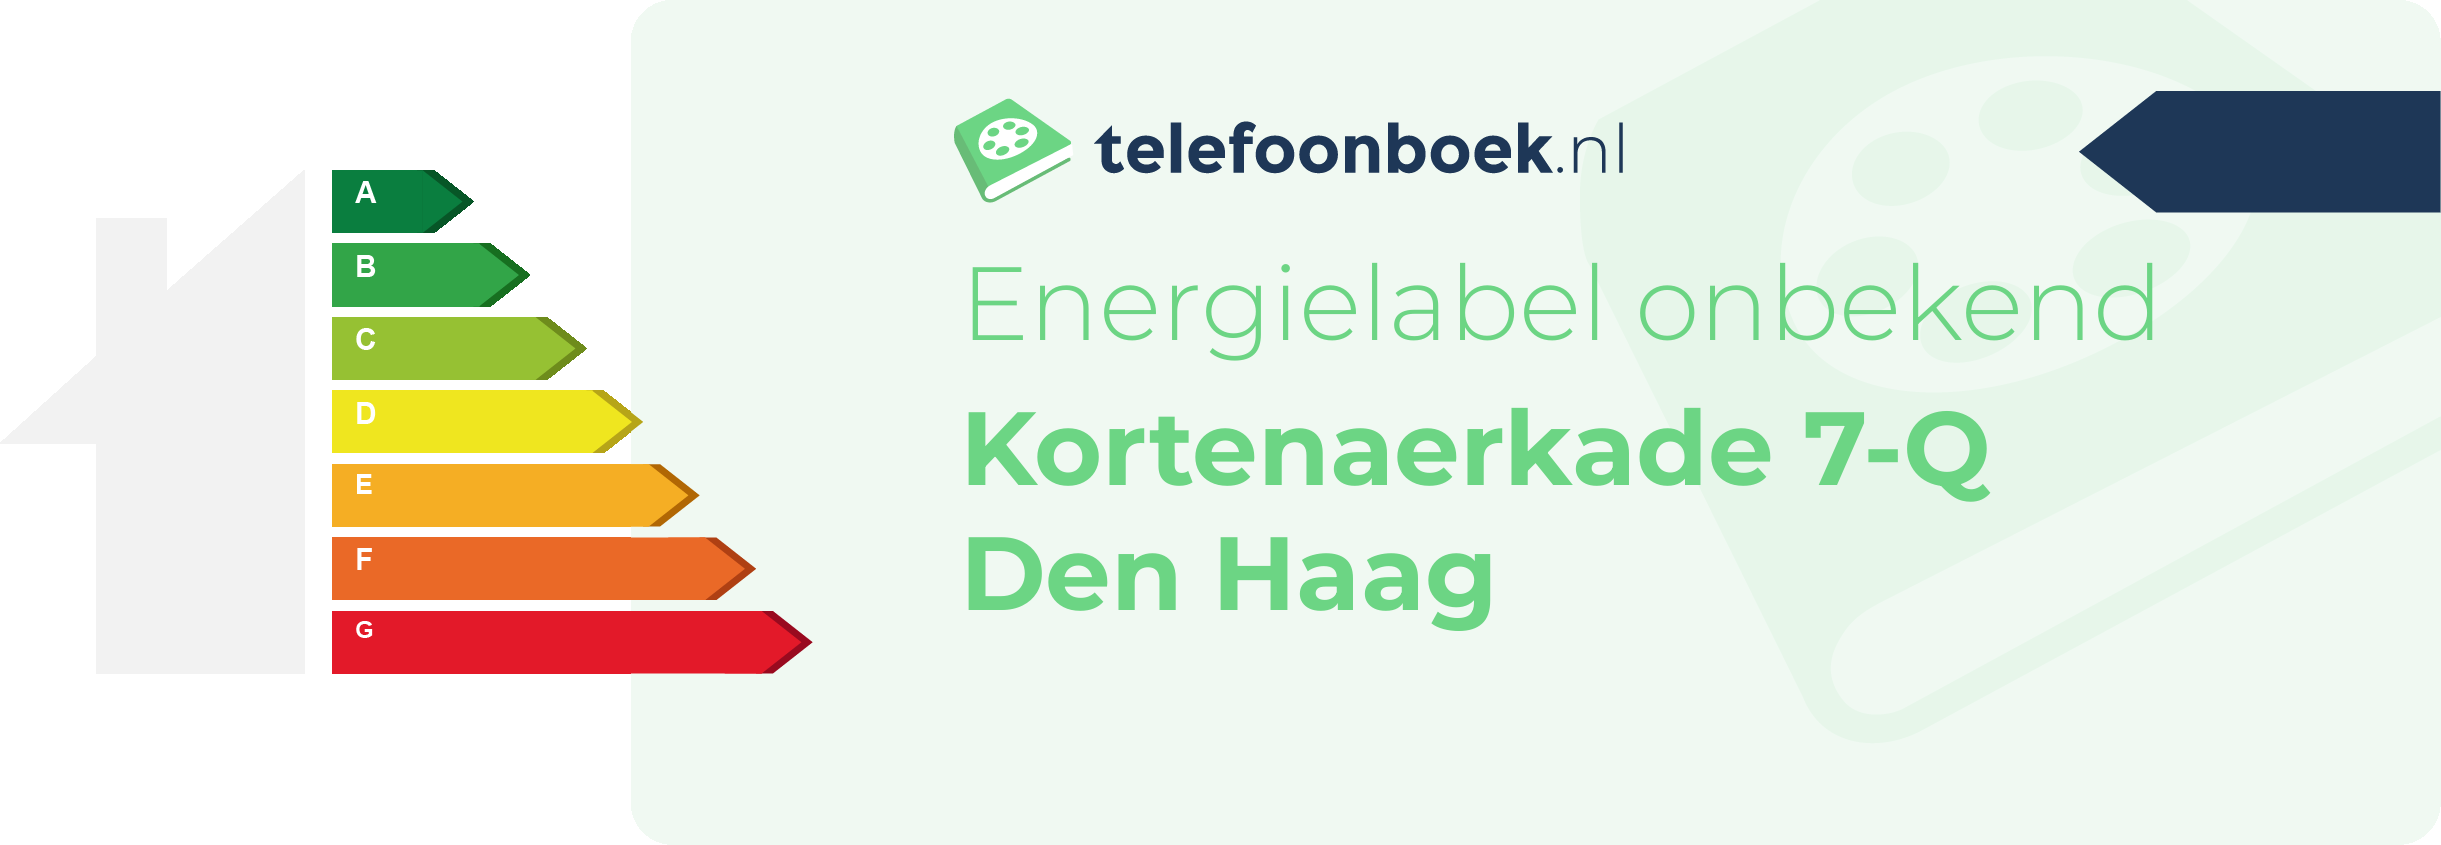 Energielabel Kortenaerkade 7-Q Den Haag